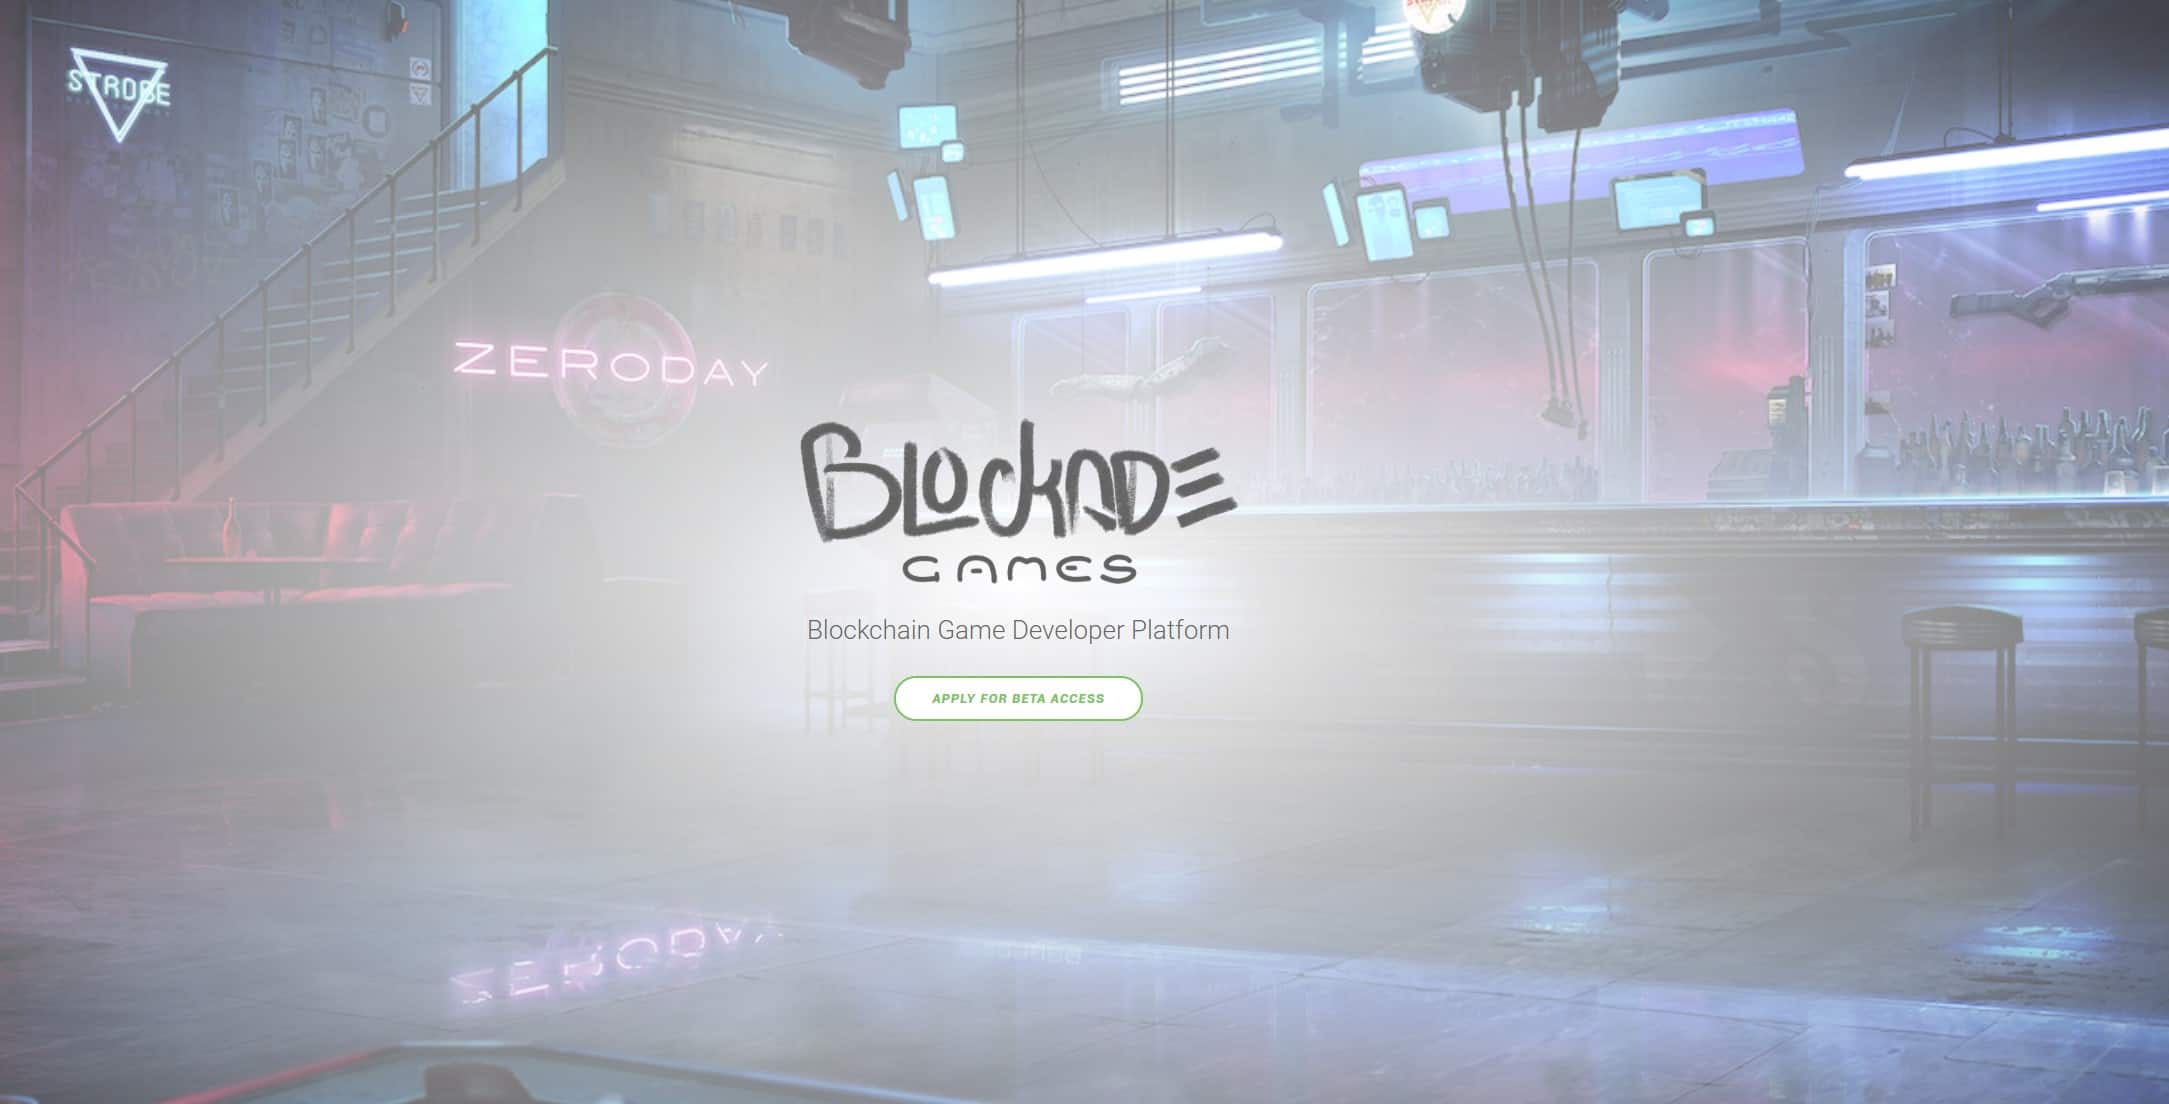 blockade games development platform Blockade Games, known for the upcoming title "Neon District" recently announced their own game developer platform!